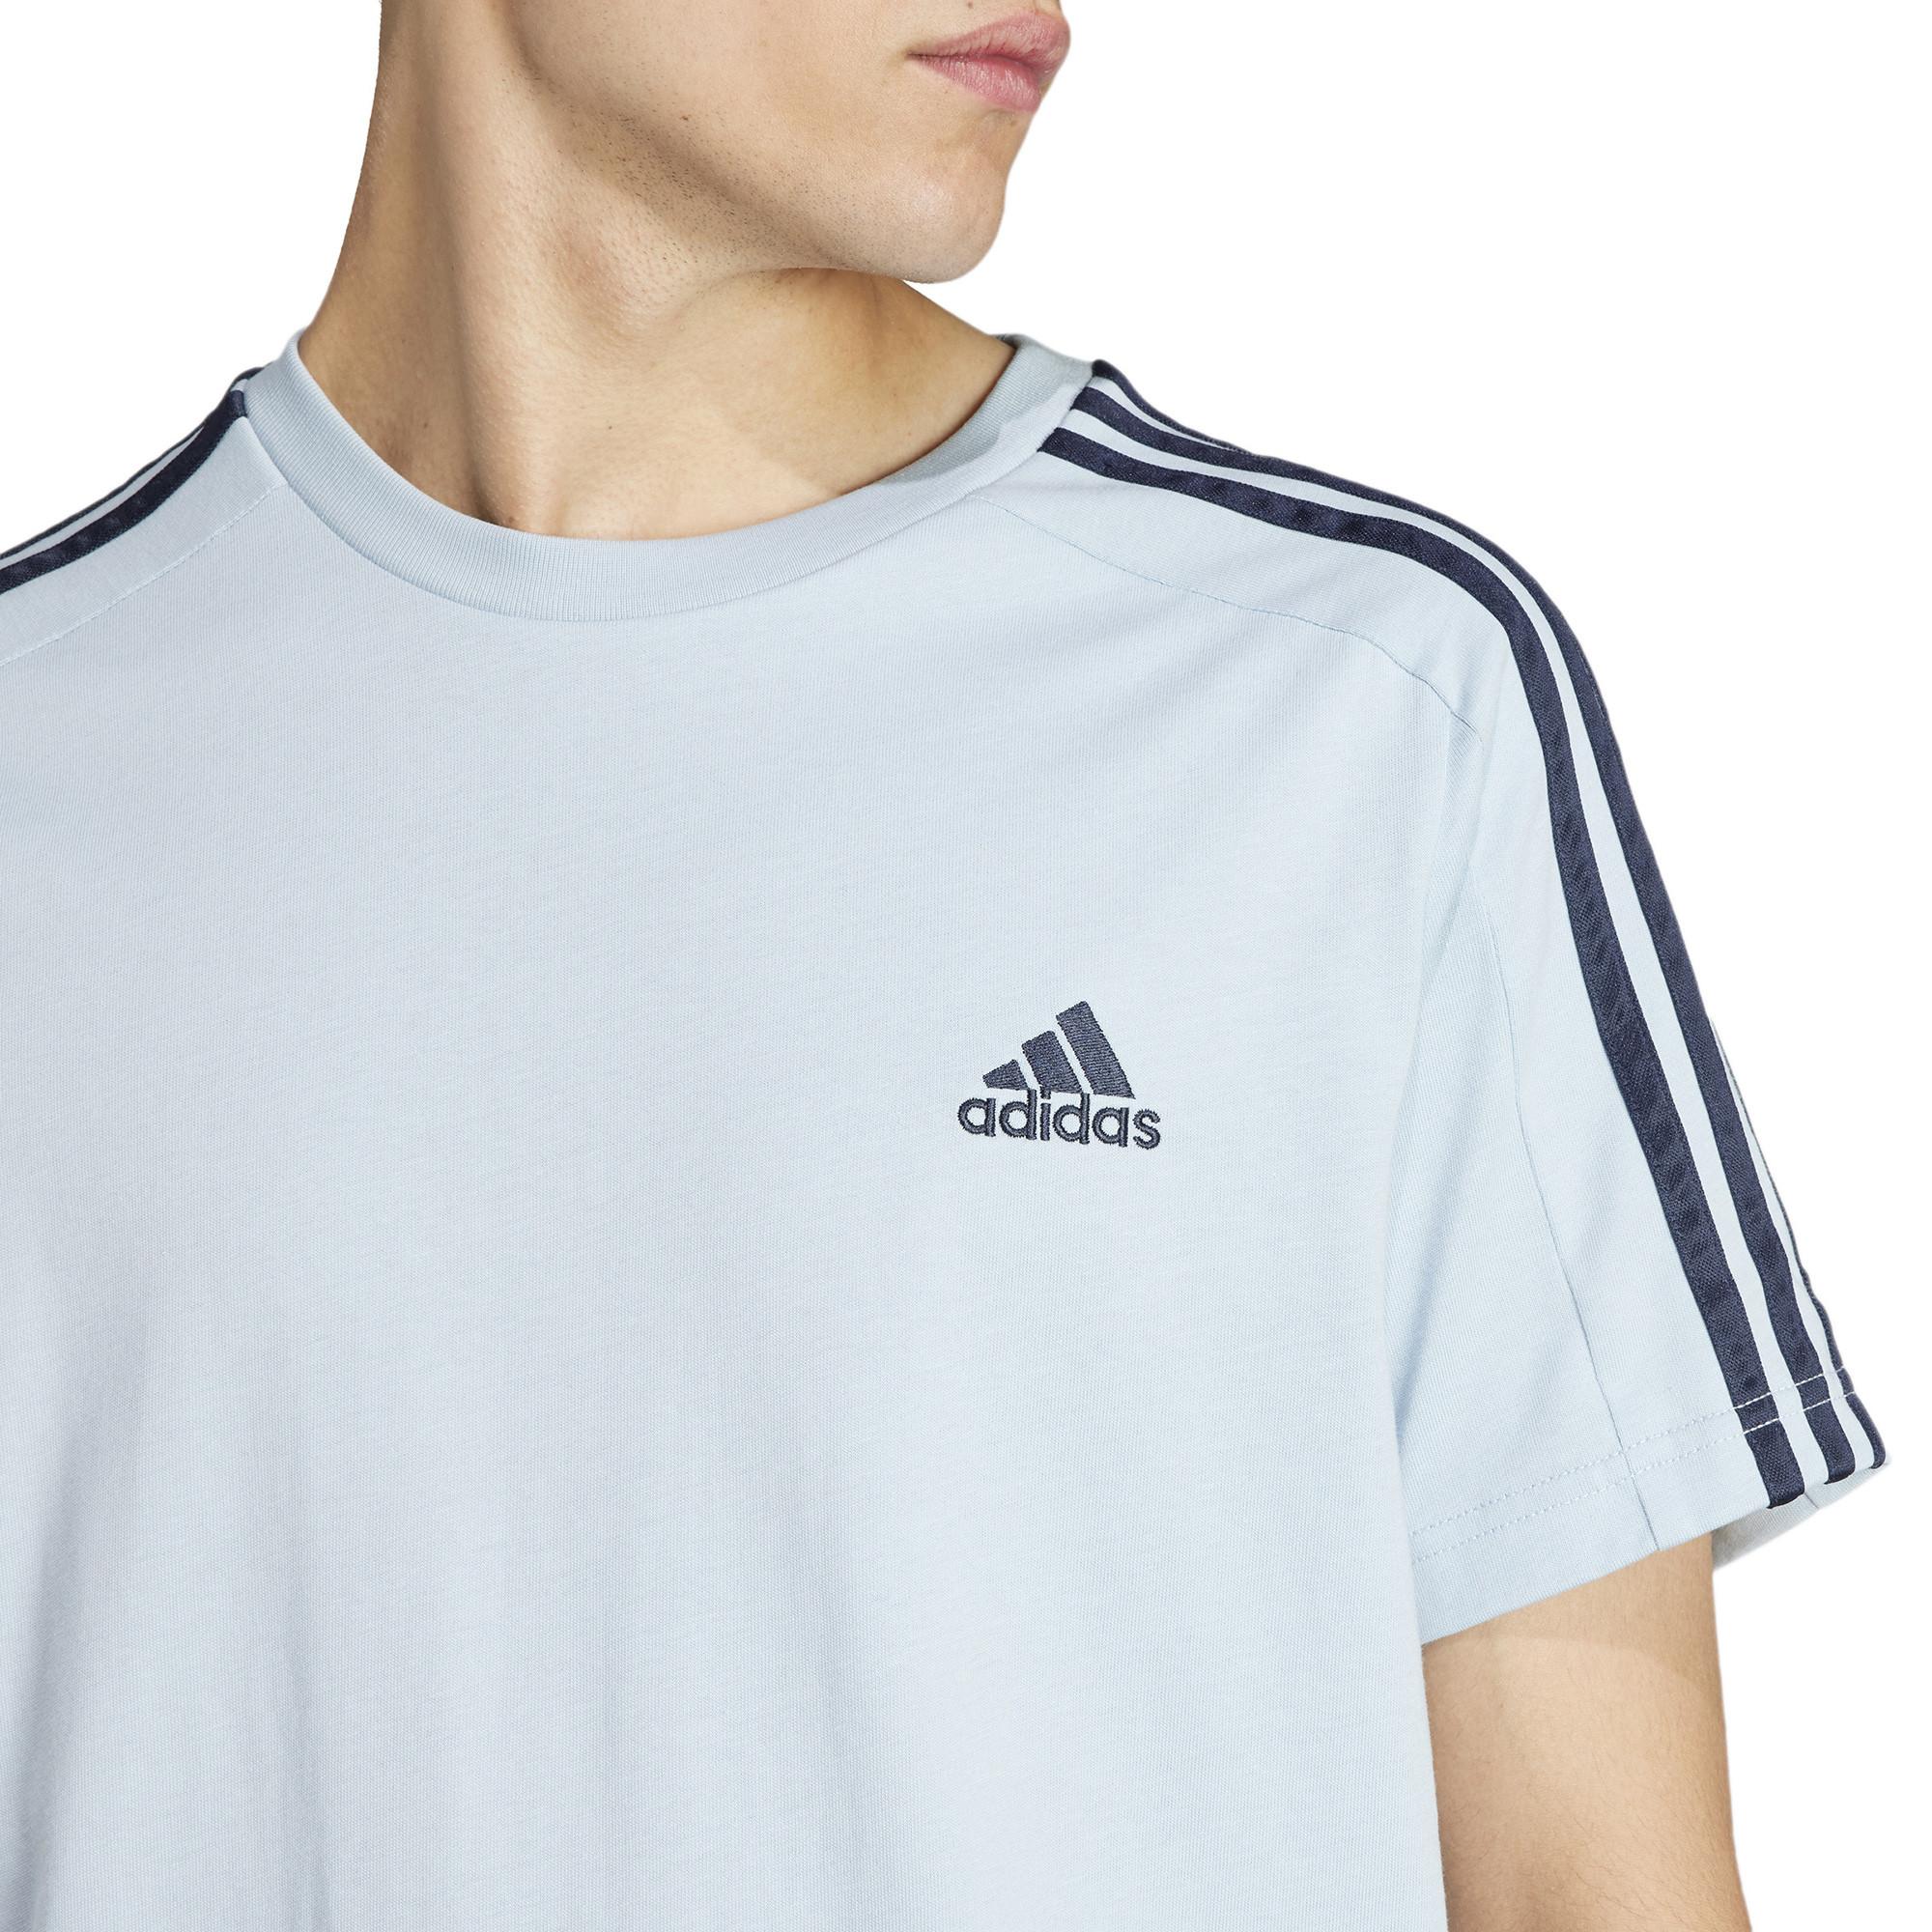 adidas 3S SJ T WONBLU T-shirt girocollo, maniche corte 